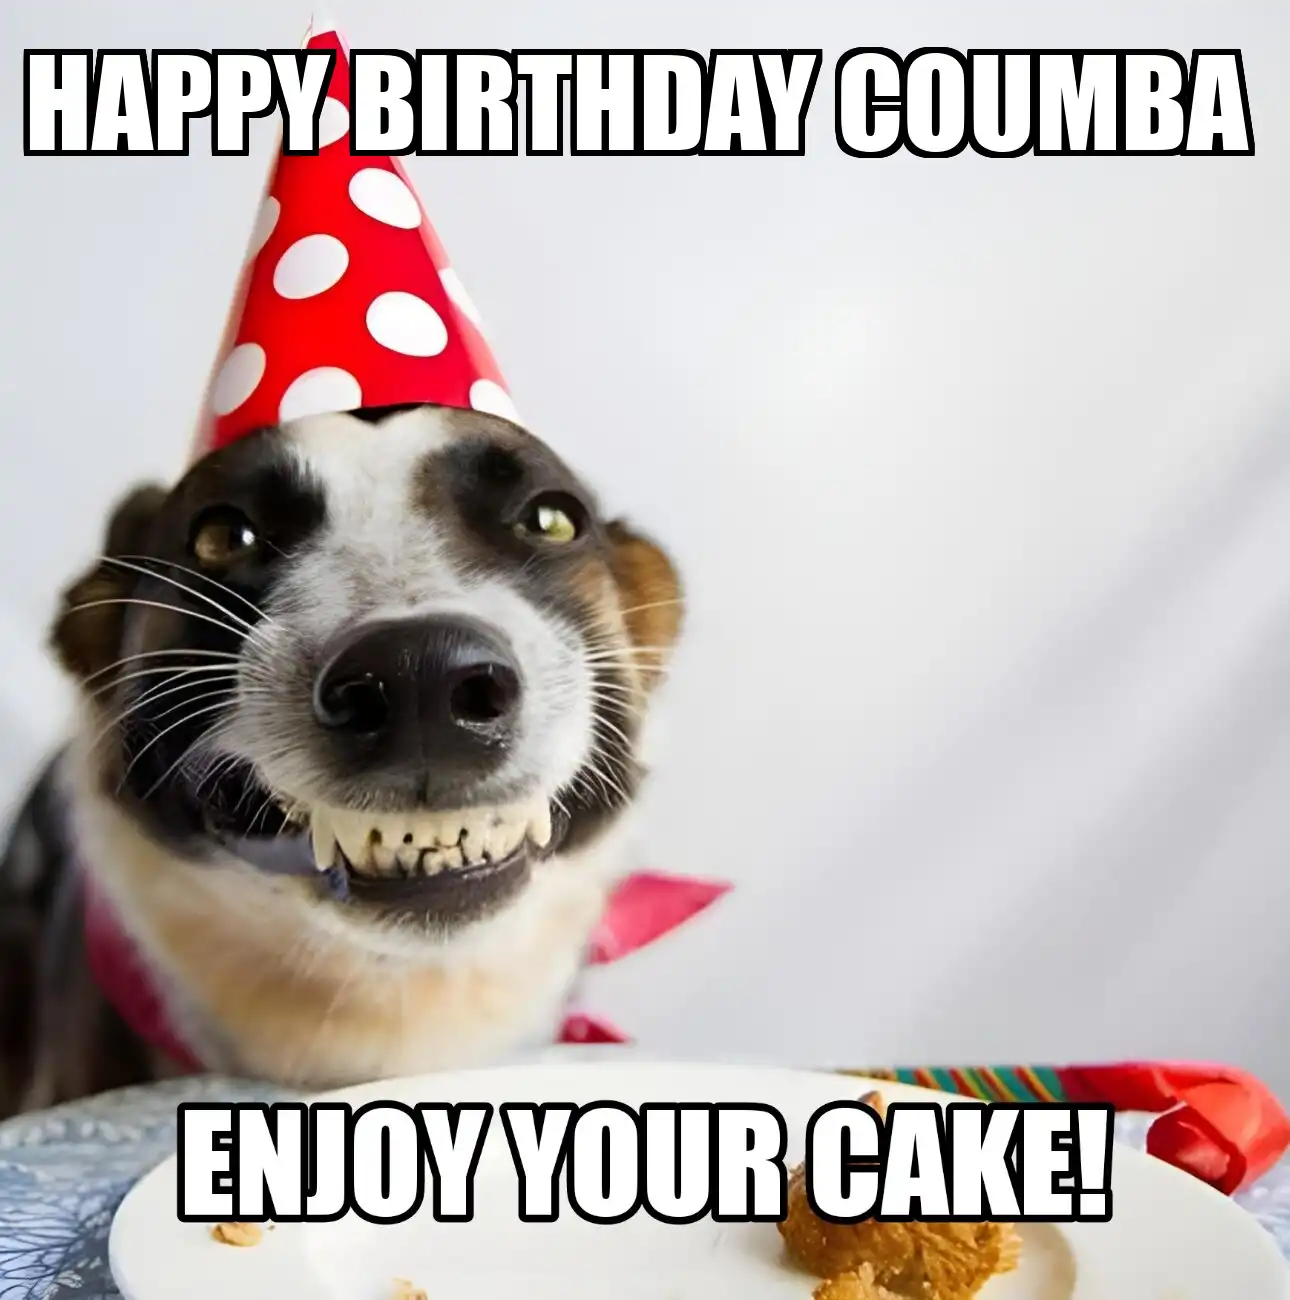 Happy Birthday Coumba Enjoy Your Cake Dog Meme